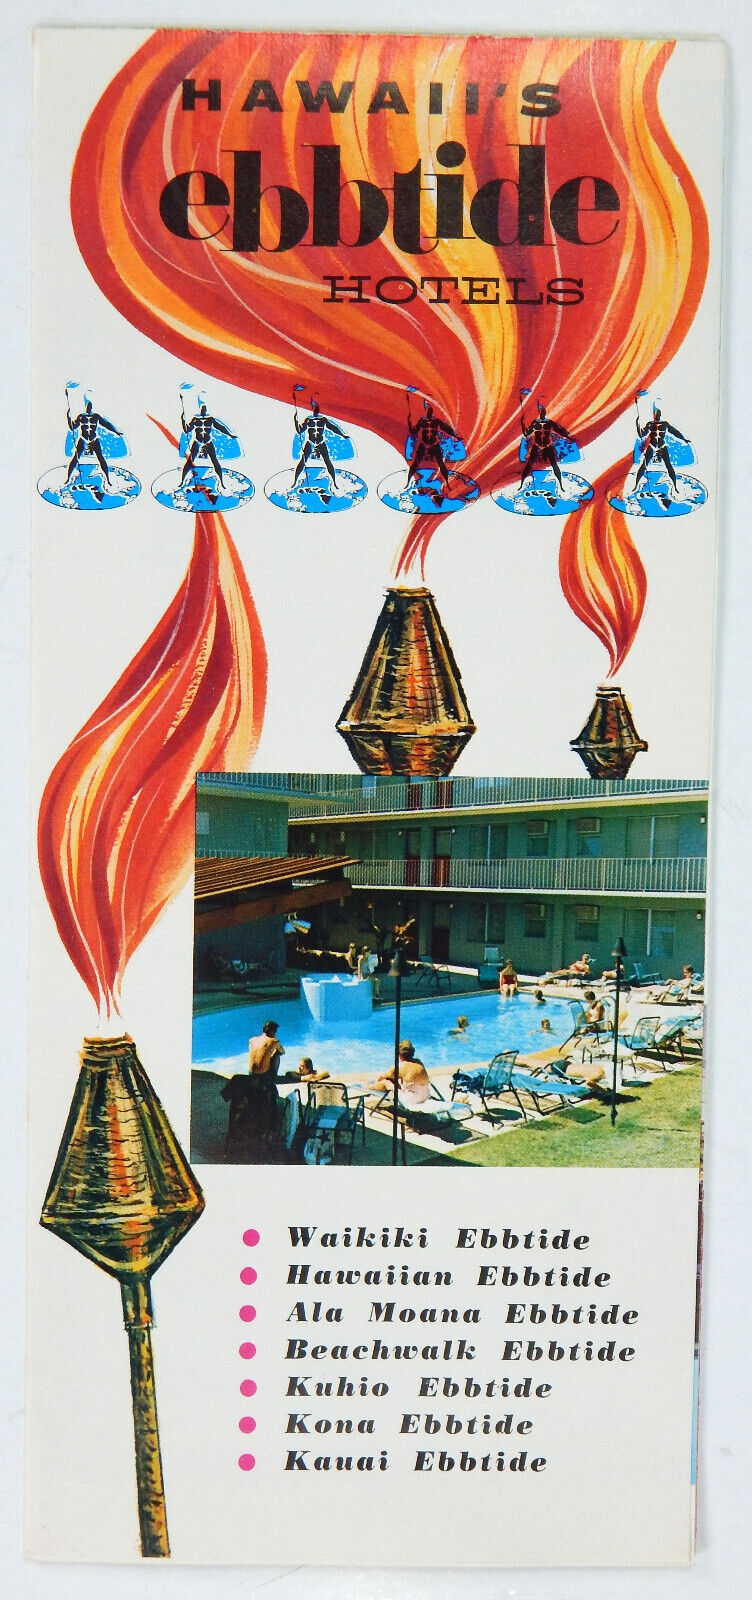 HAWAII EBBTIDE HOTELS AD SALES PAMPHLET BROCHURE WAIKIKI EARLY 1960s MAP PHOTOS